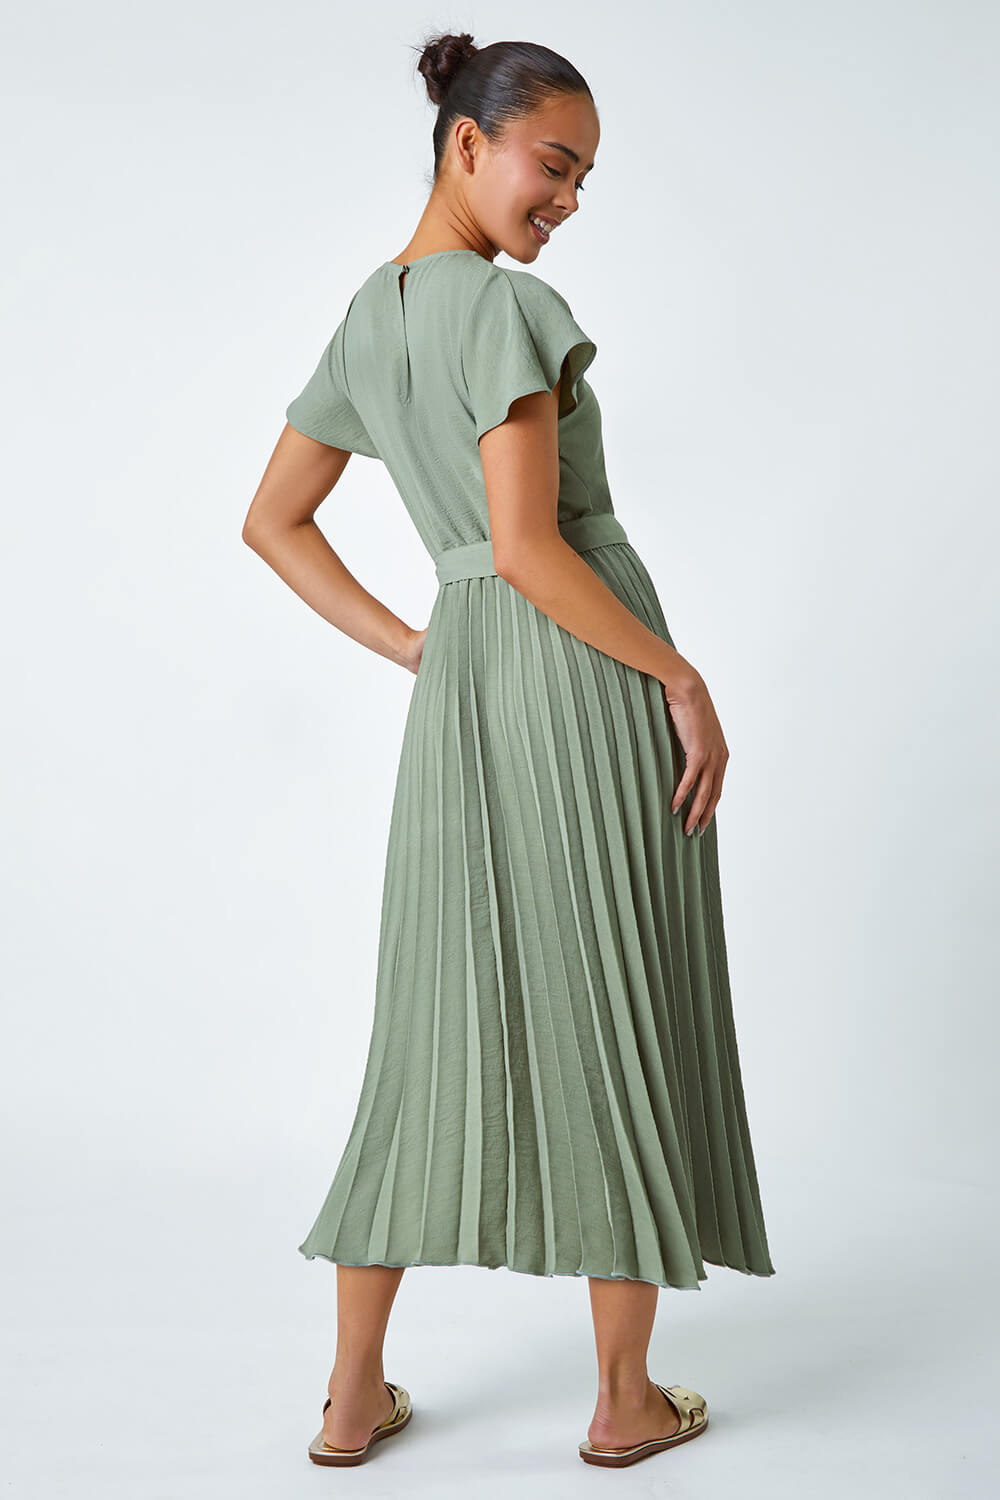 KHAKI Petite Plain Pleated Skirt Midi Dress, Image 3 of 5